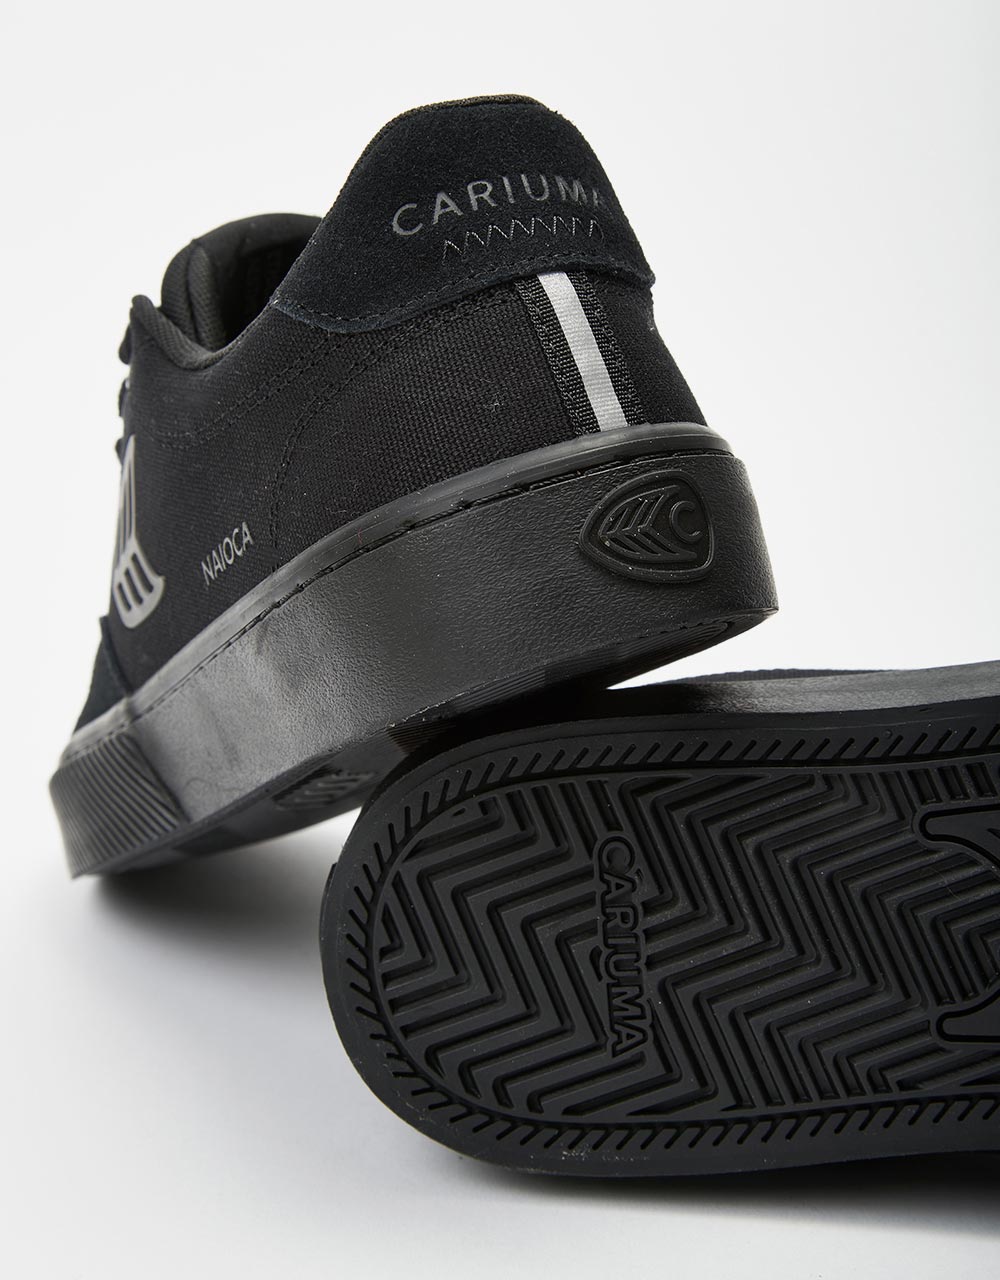 Cariuma Naioca Pro Skate Shoes - All Black/Black